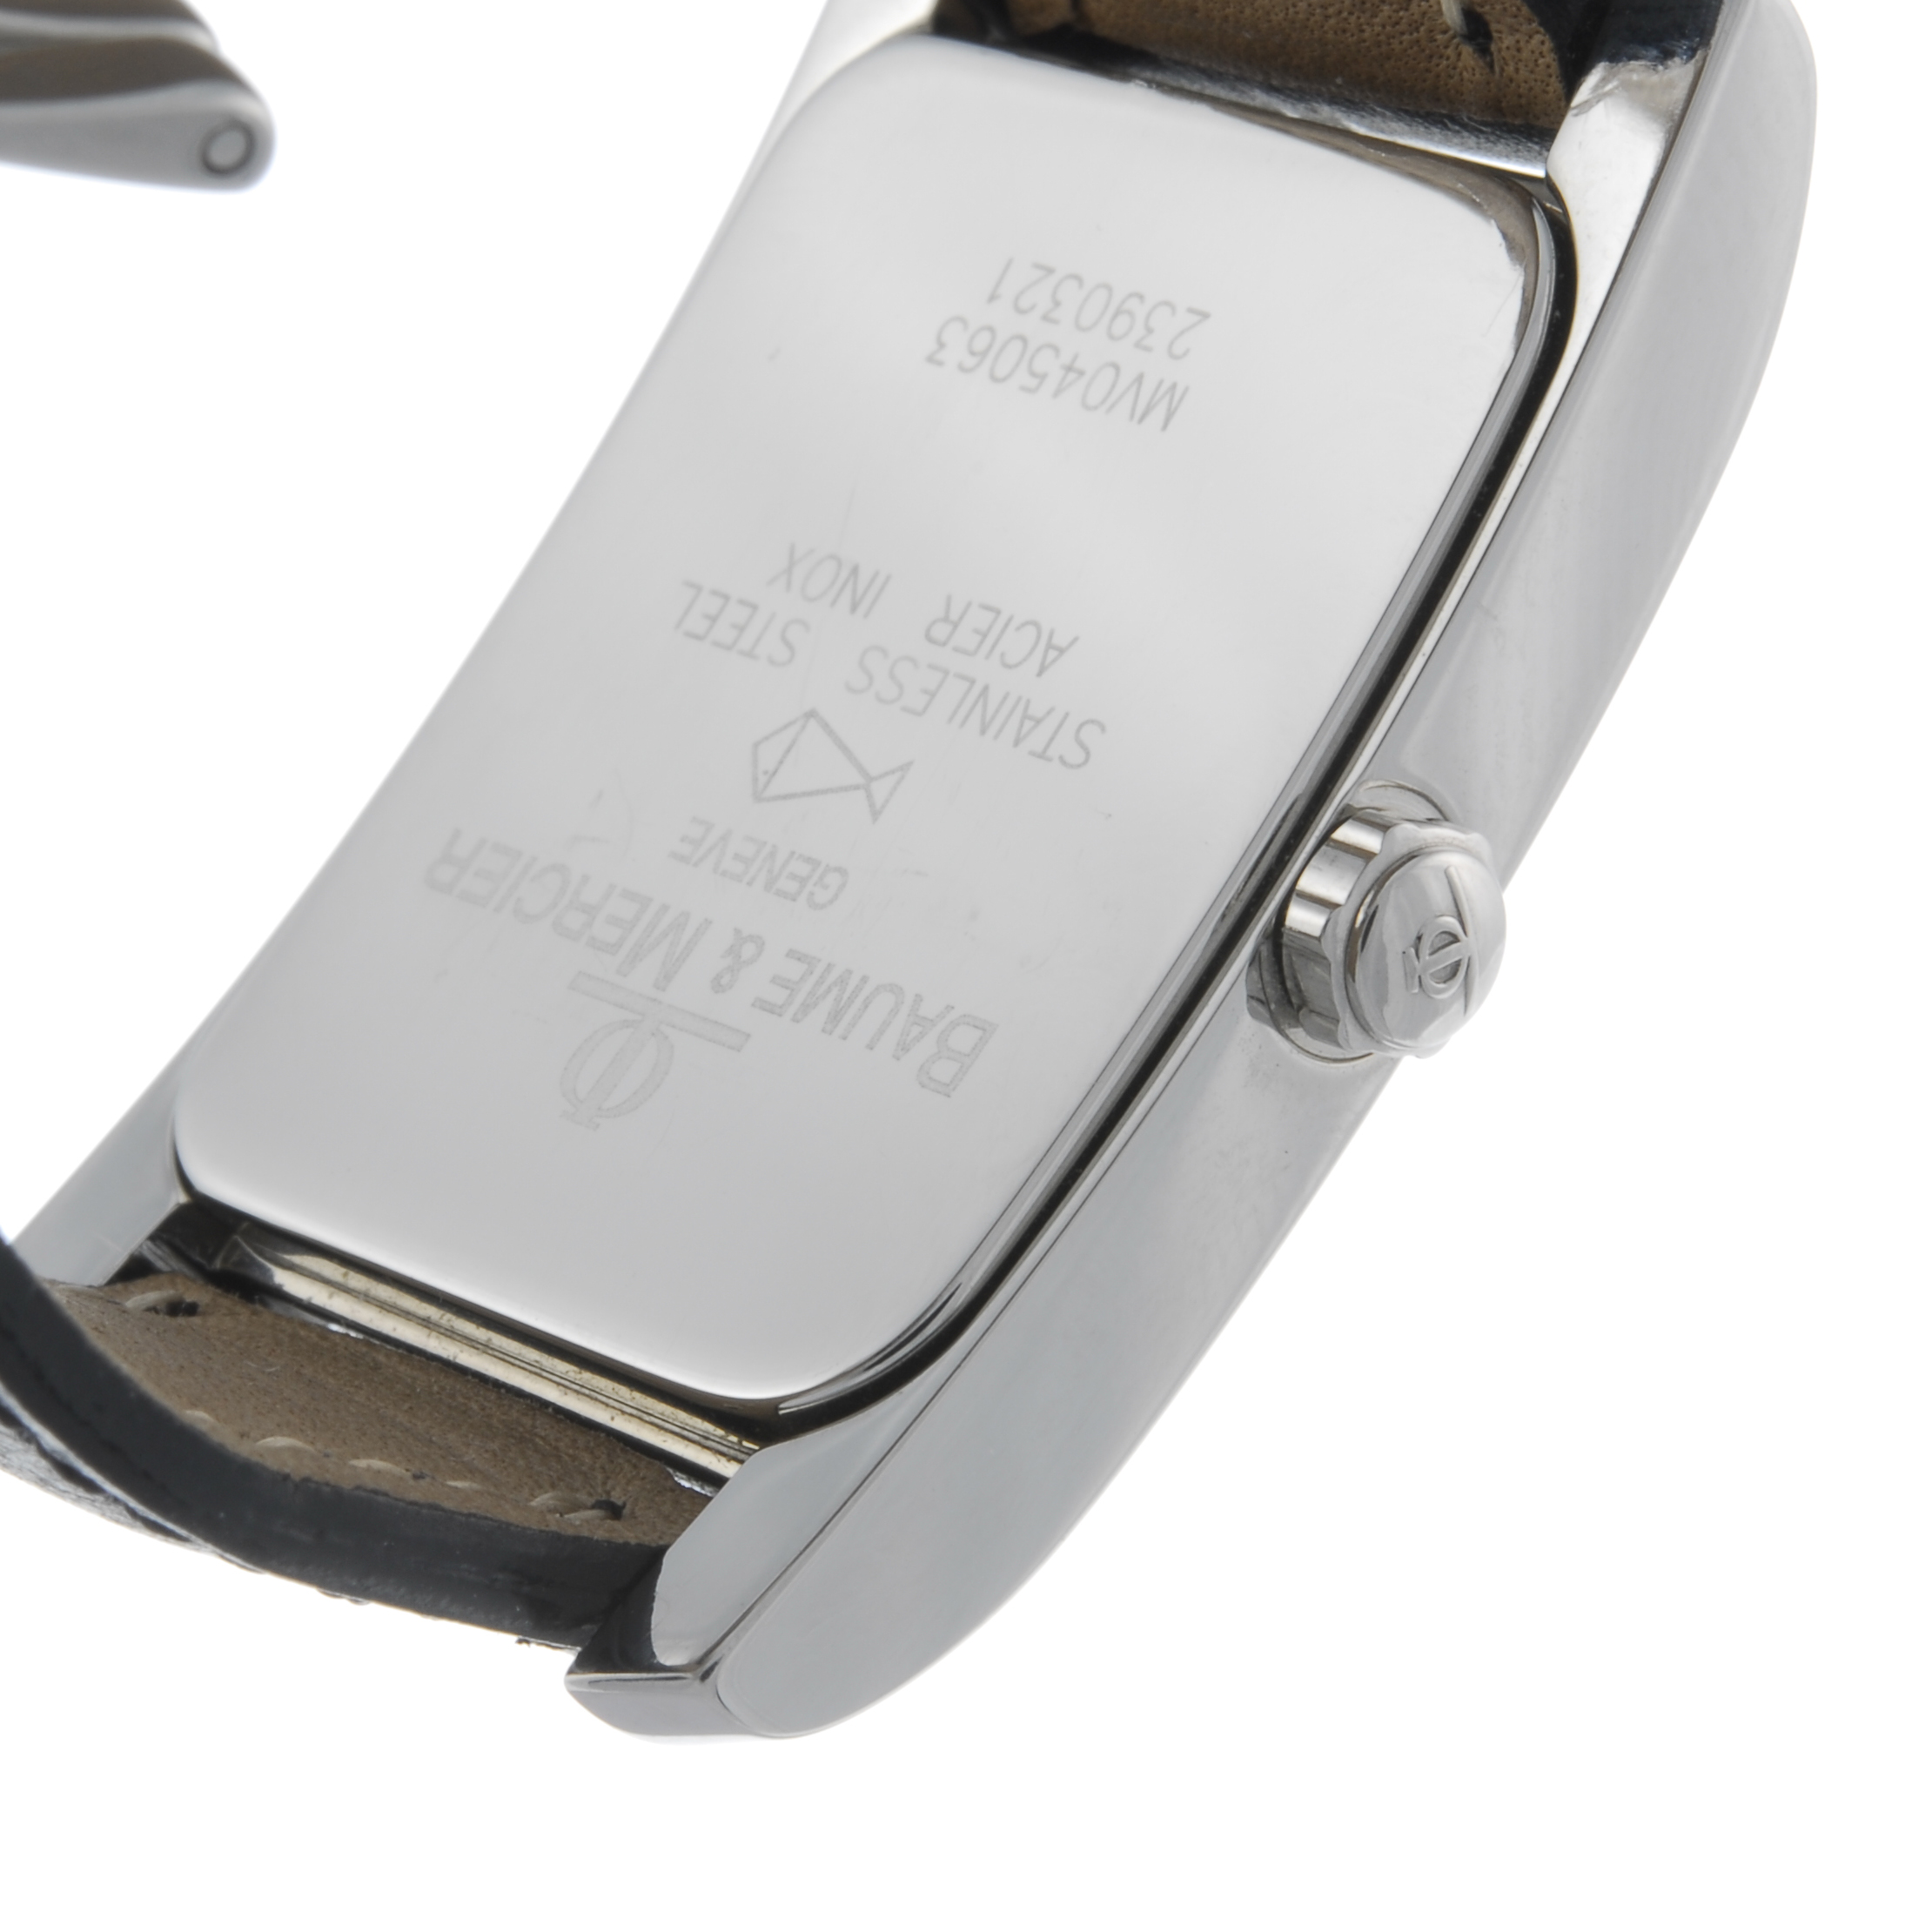 BAUME & MERCIER - a gentleman's Hampton wrist watch. Stainless steel case. Reference MV045063, - Image 3 of 4